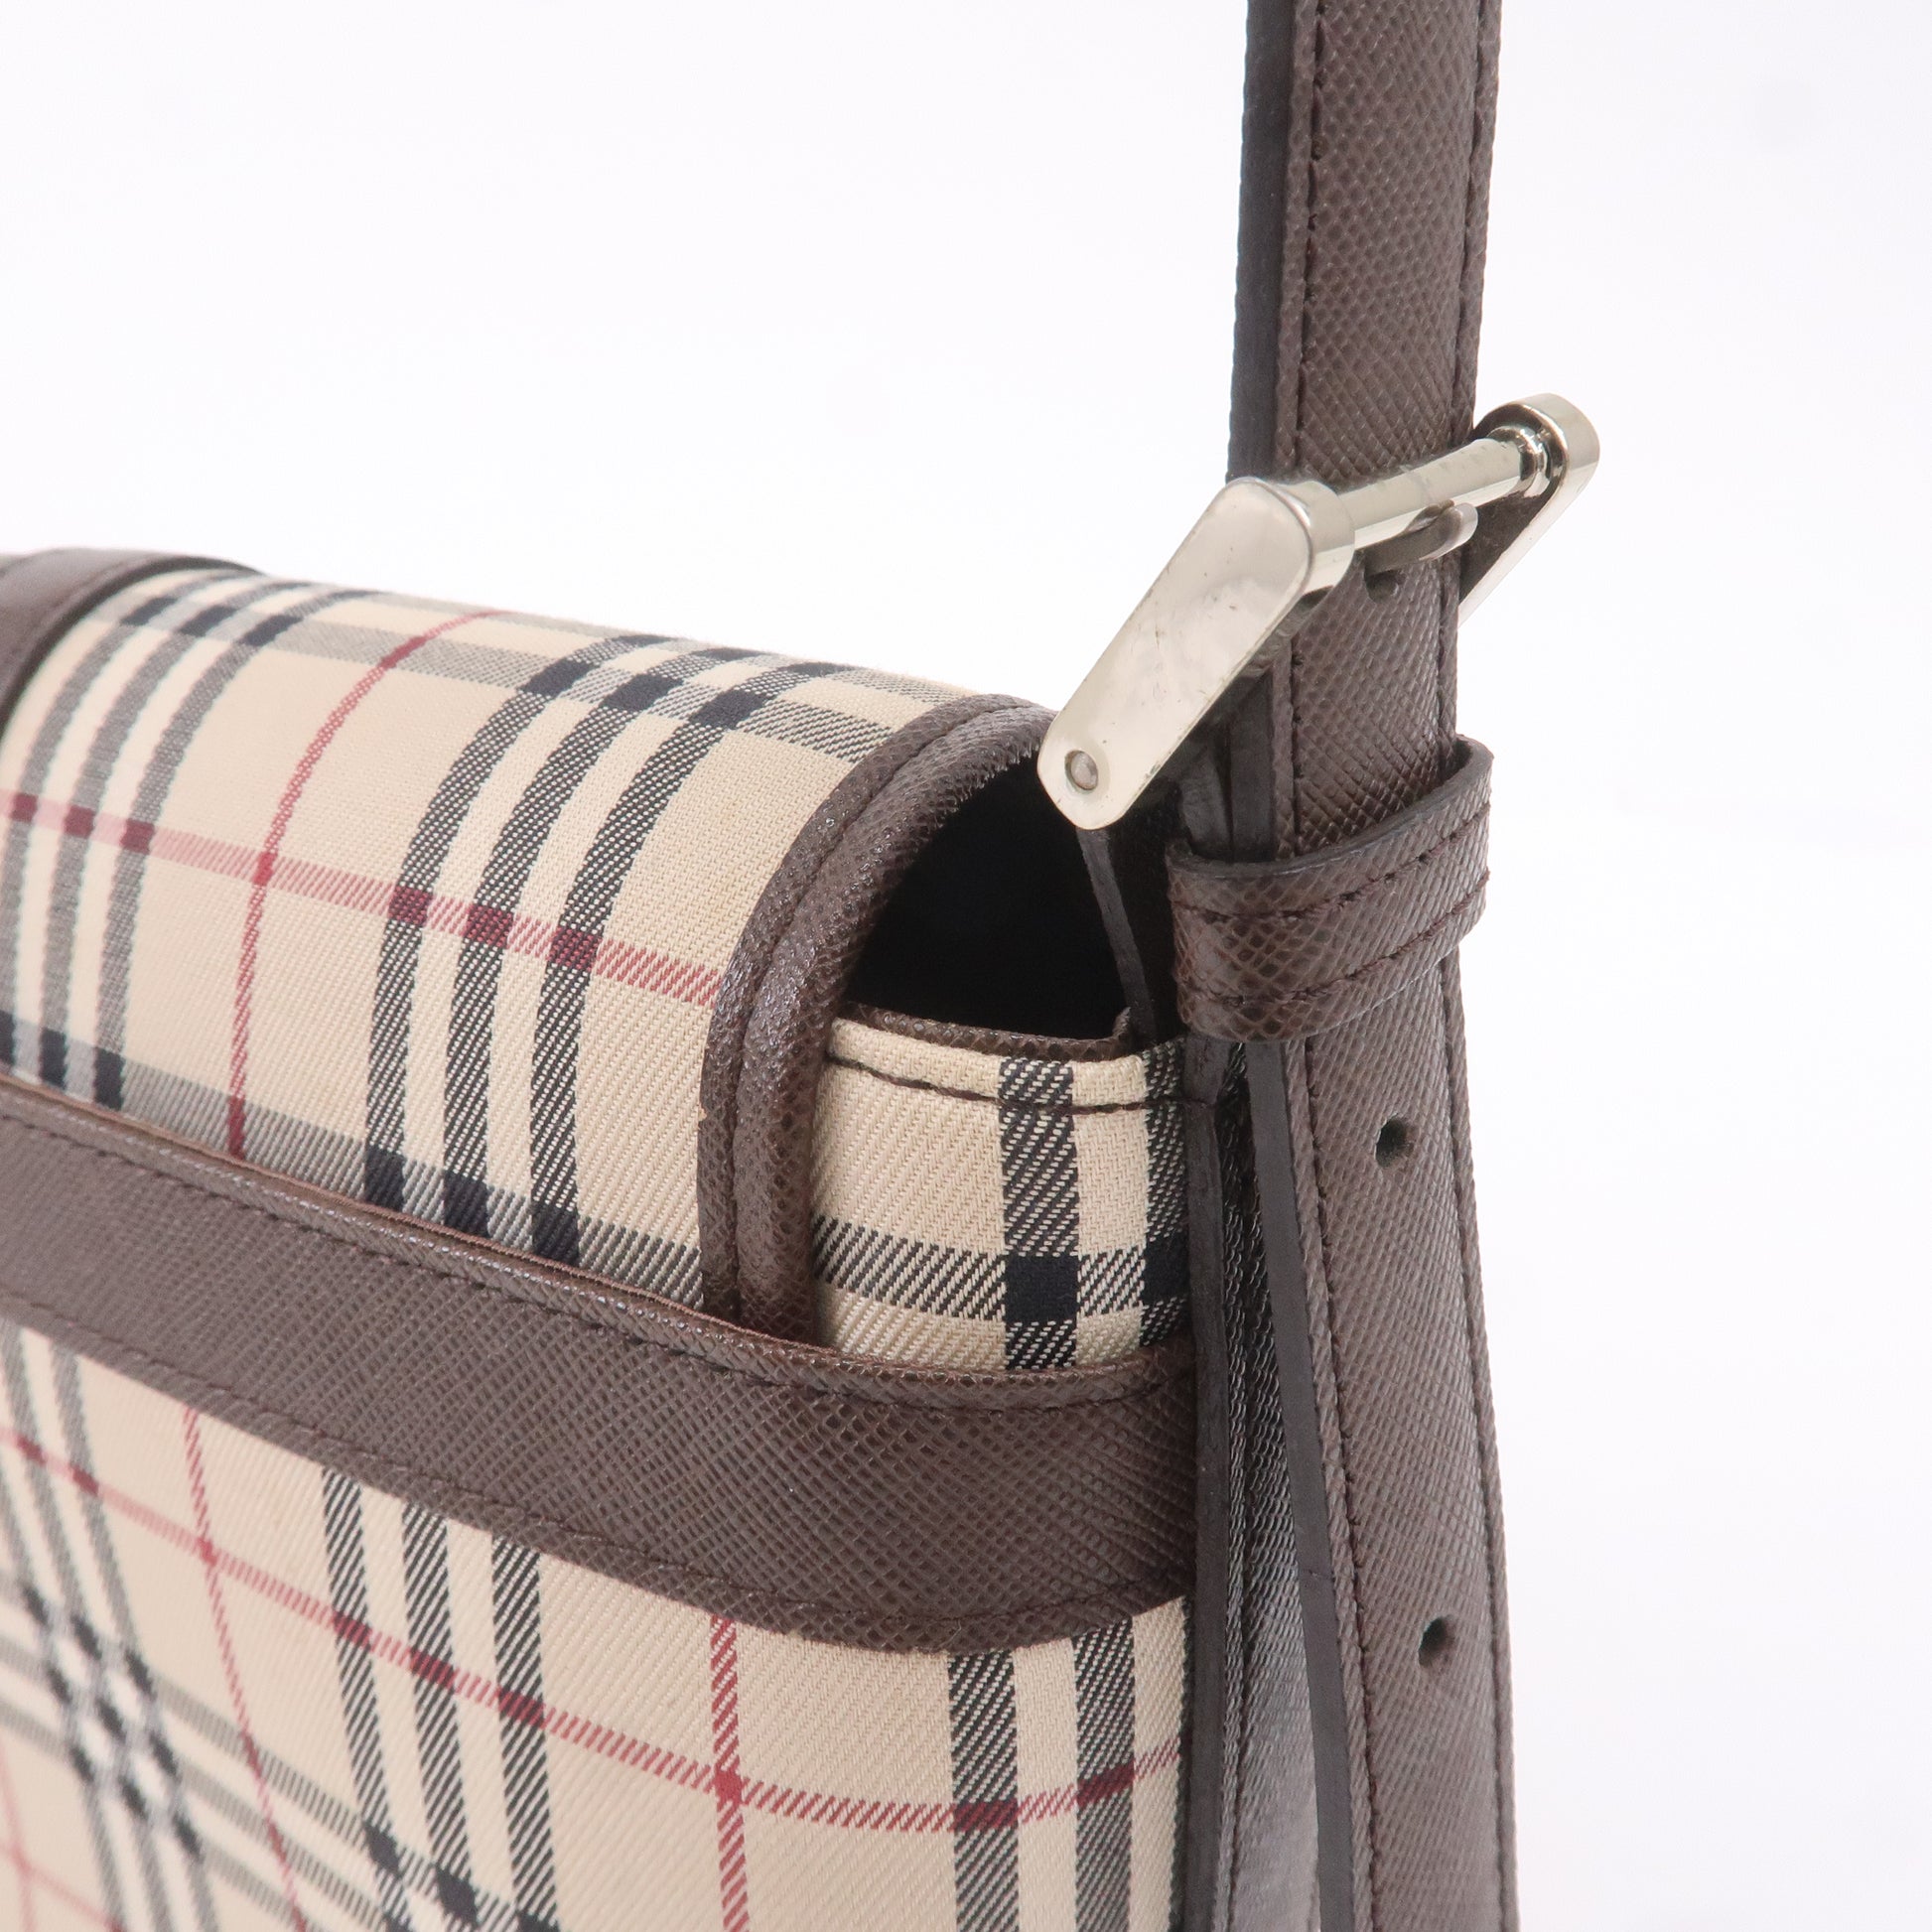 Burberry shoulder bag pochette check pattern canvas leather beige dark